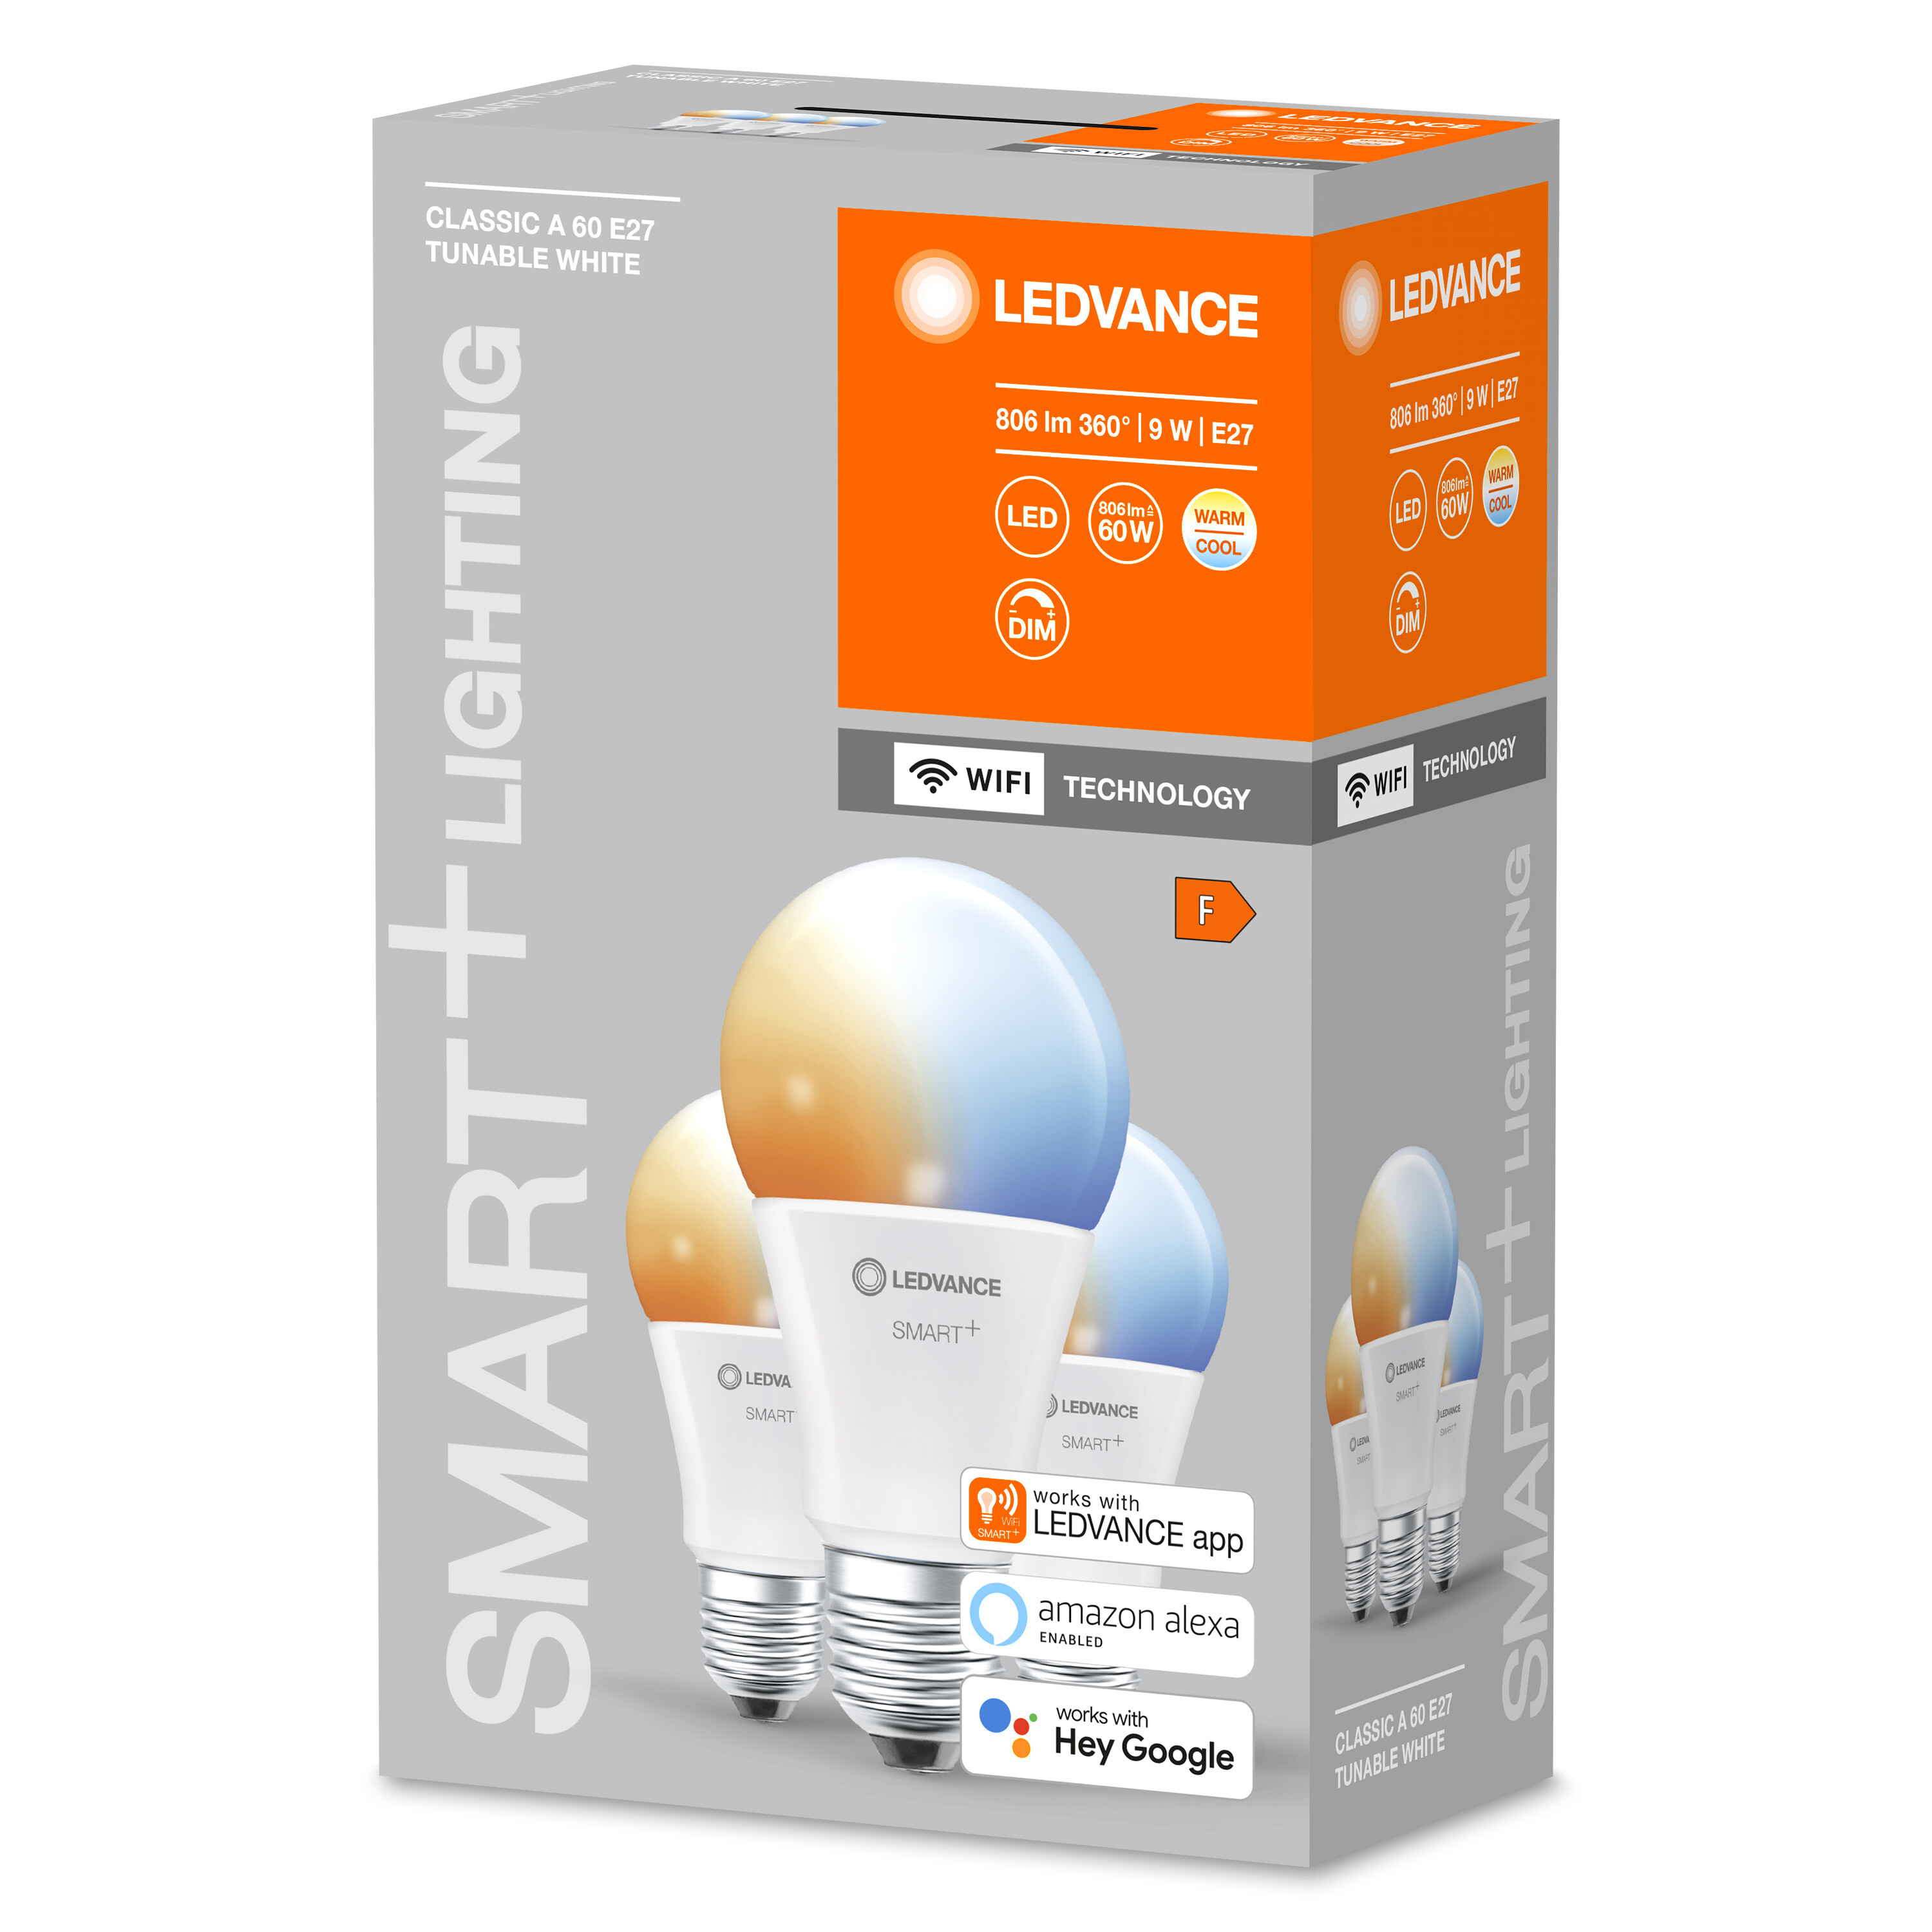 LEDVANCE SMART+ Lampe White Tunable änderbar Classic Lichtfarbe WiFi LED